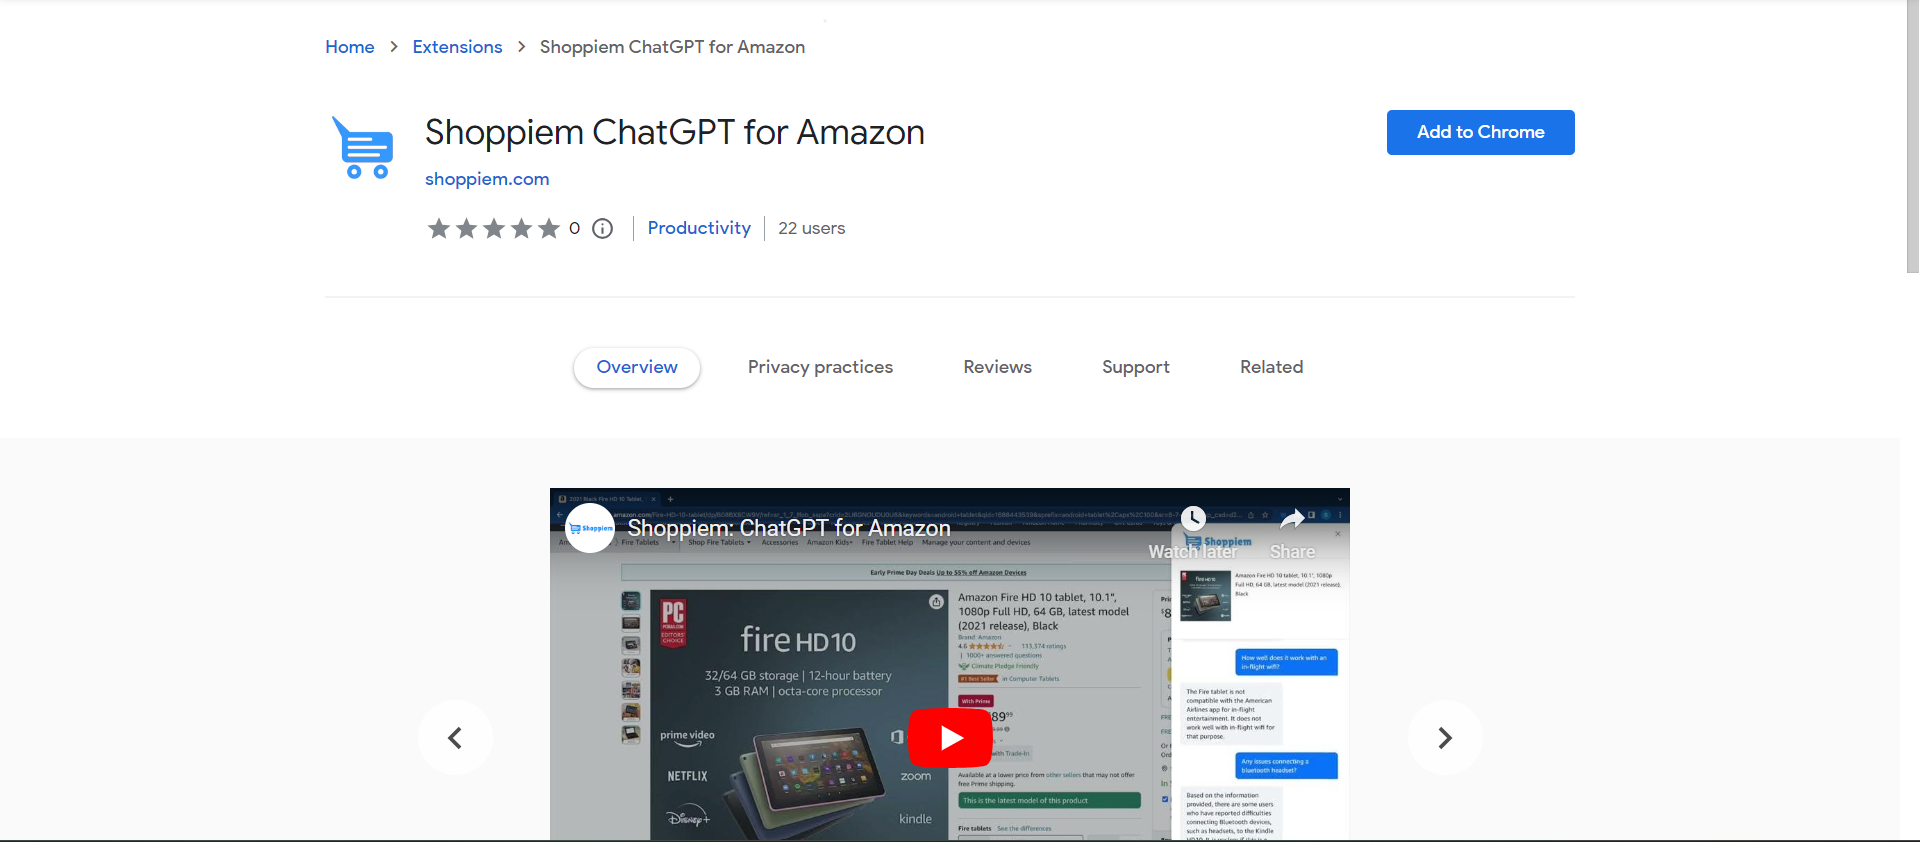 Shoppiem ChatGPT for Amazon